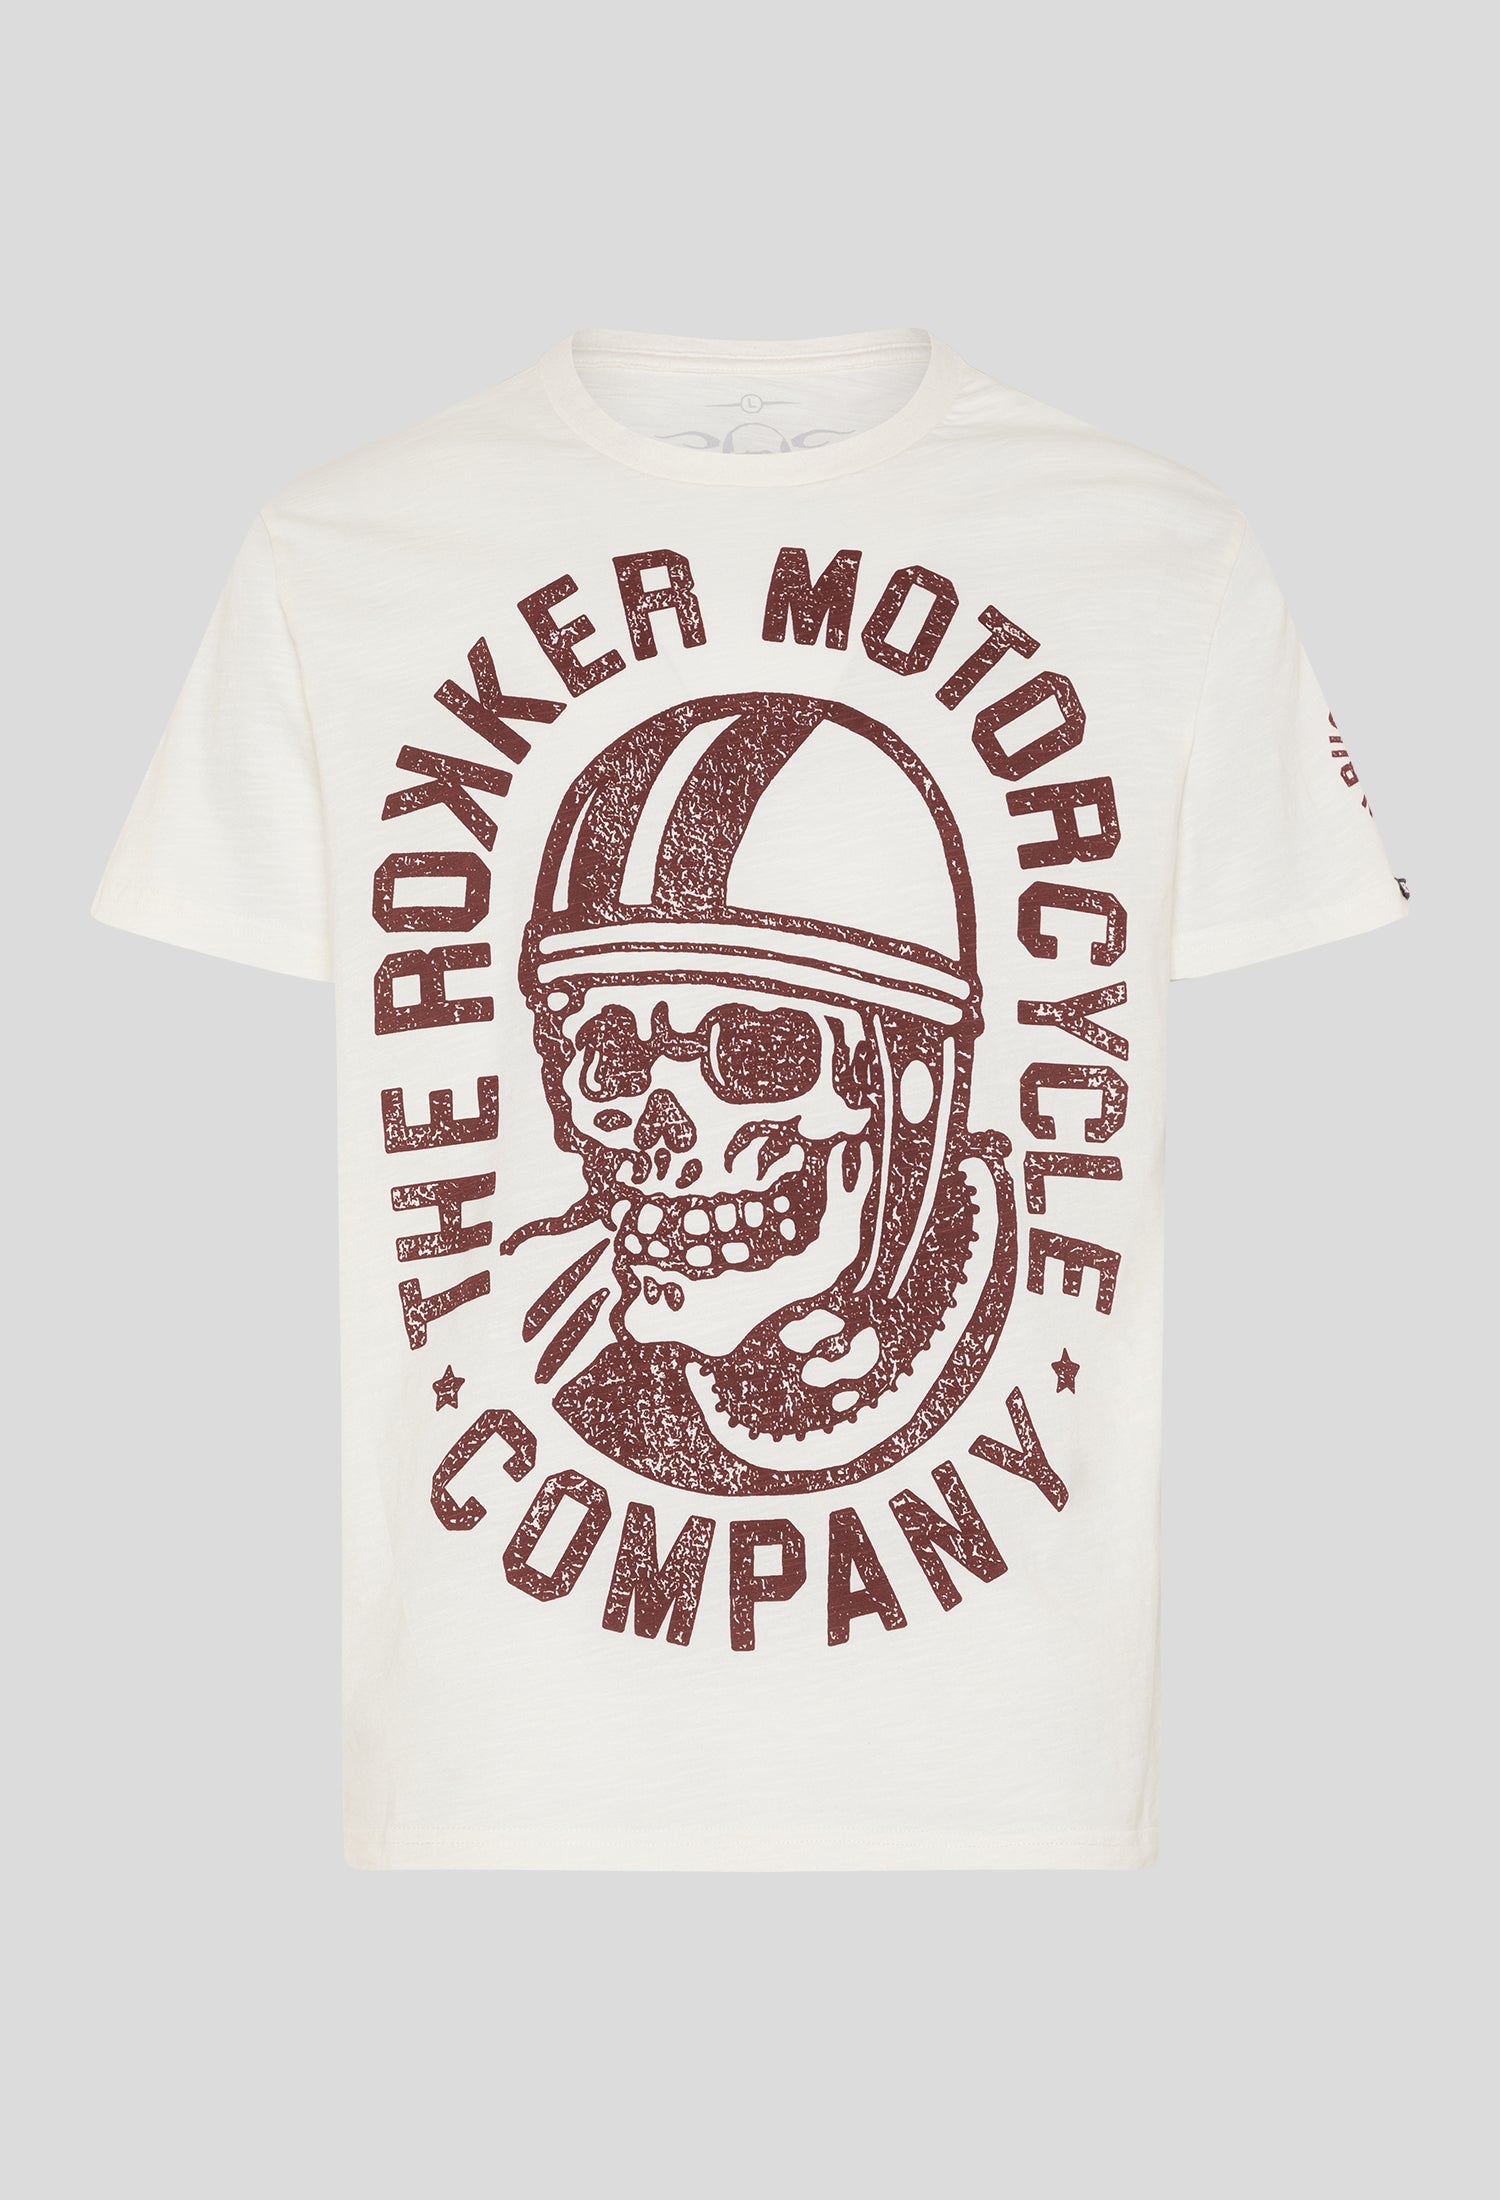 Motorcycle 77 Co. T-Shirt Men Dirt White